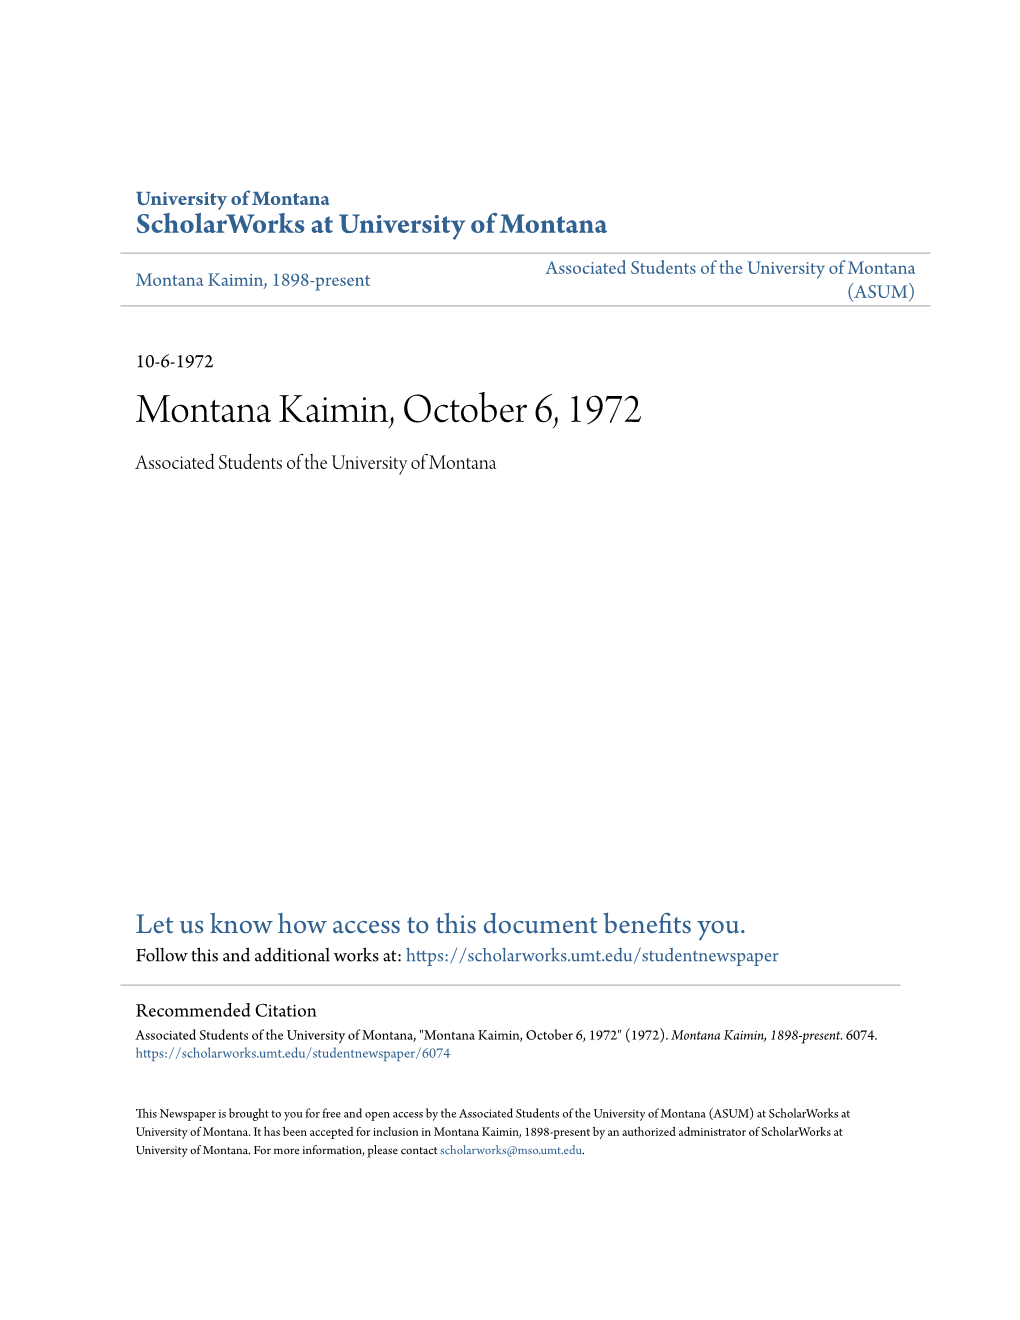 Montana Kaimin, October 6, 1972 Associated Students of the University of Montana